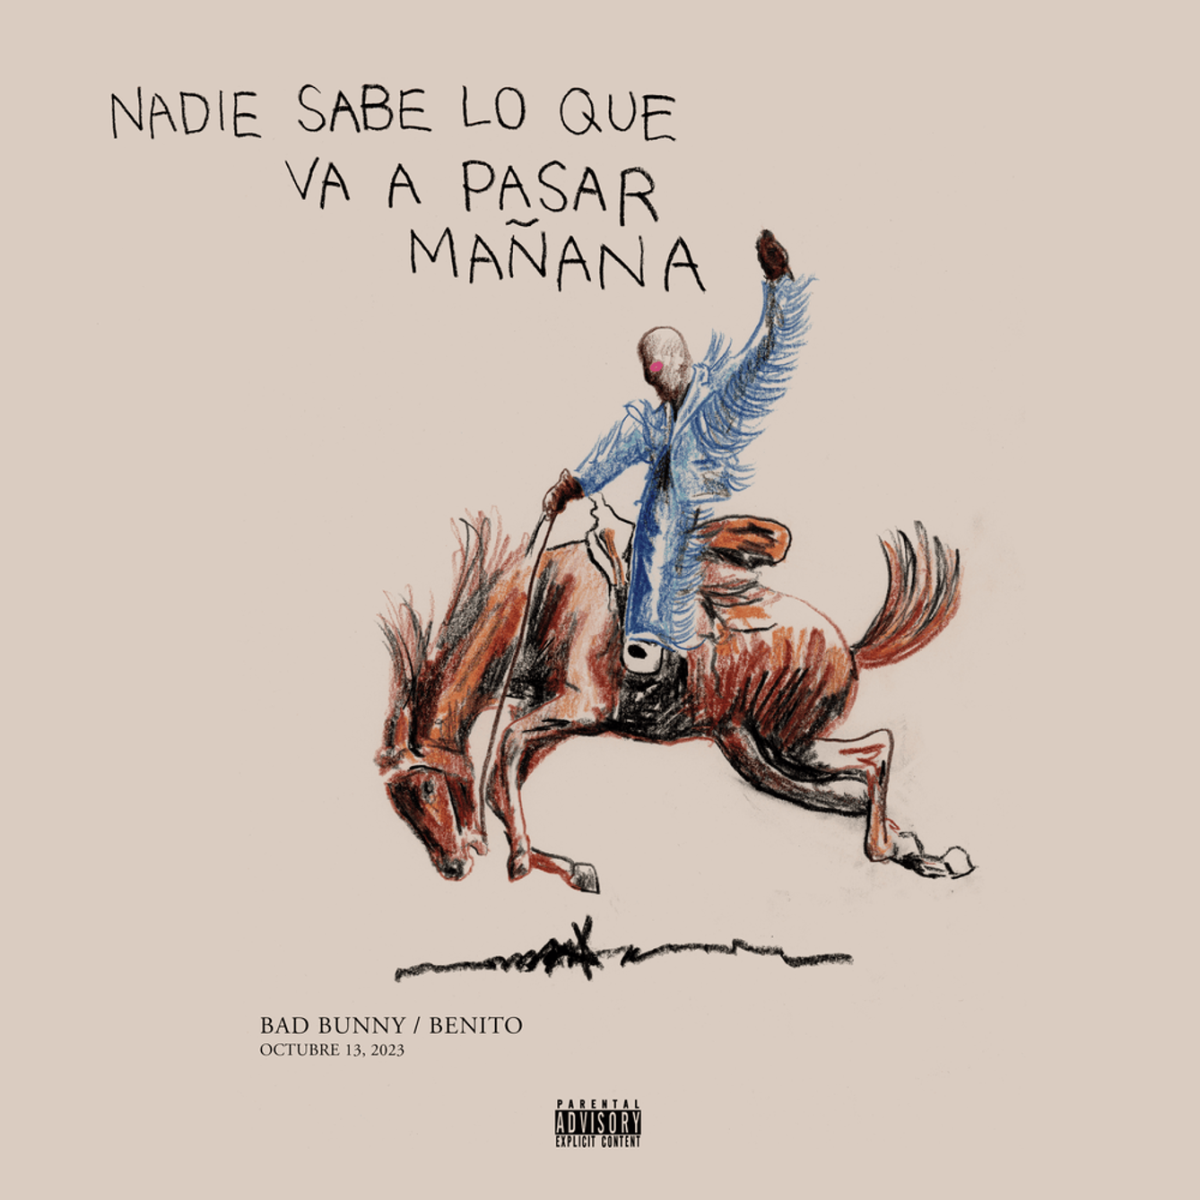 Cover art of Puerto Rican artist Bad Bunny’s new album “nadie sabe lo que va a pasar mañana” on Oct. 13. 